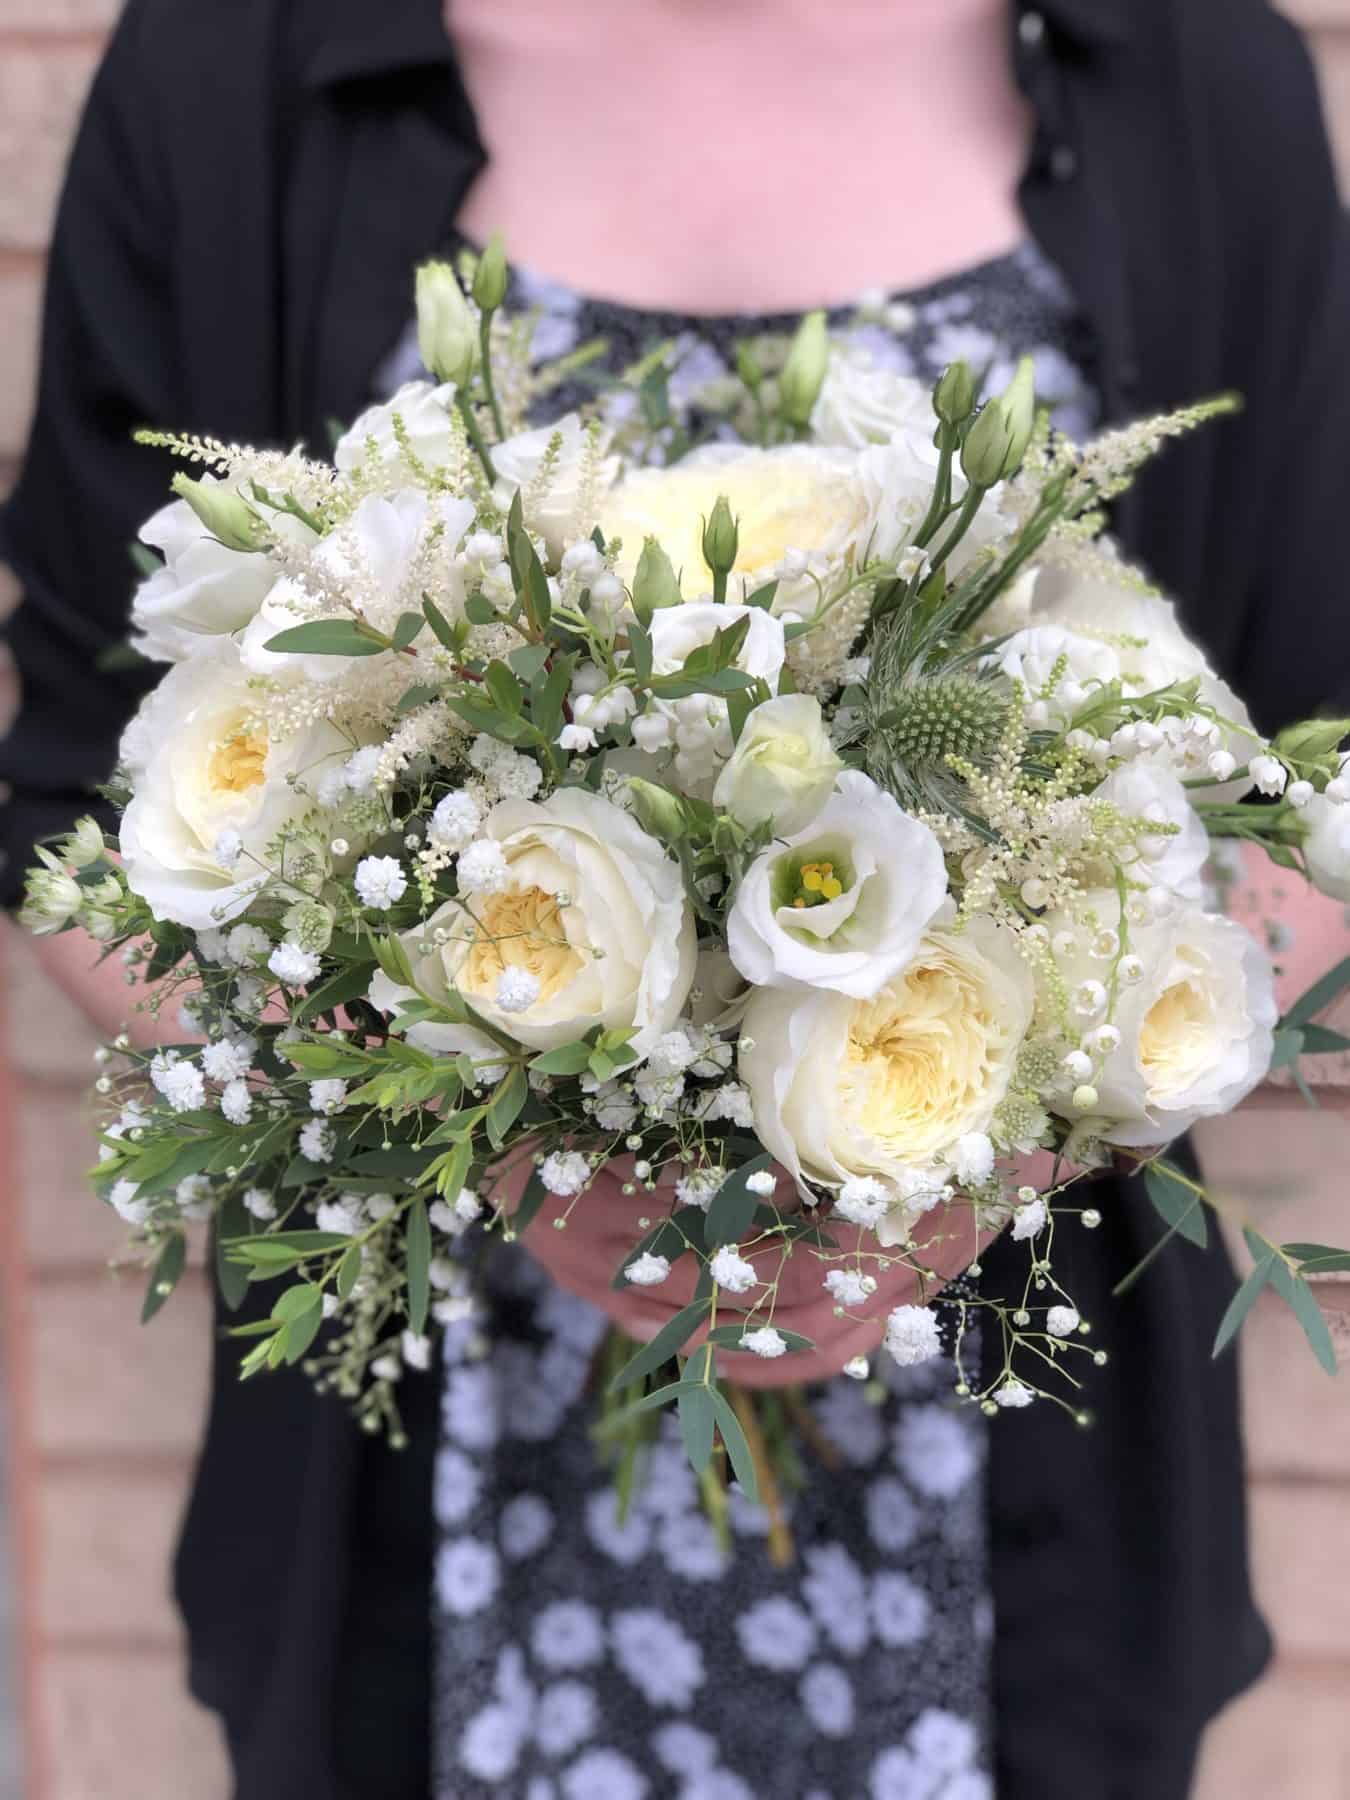 the-flower-girl-ashley-scottish-glasgow-wedding-florist